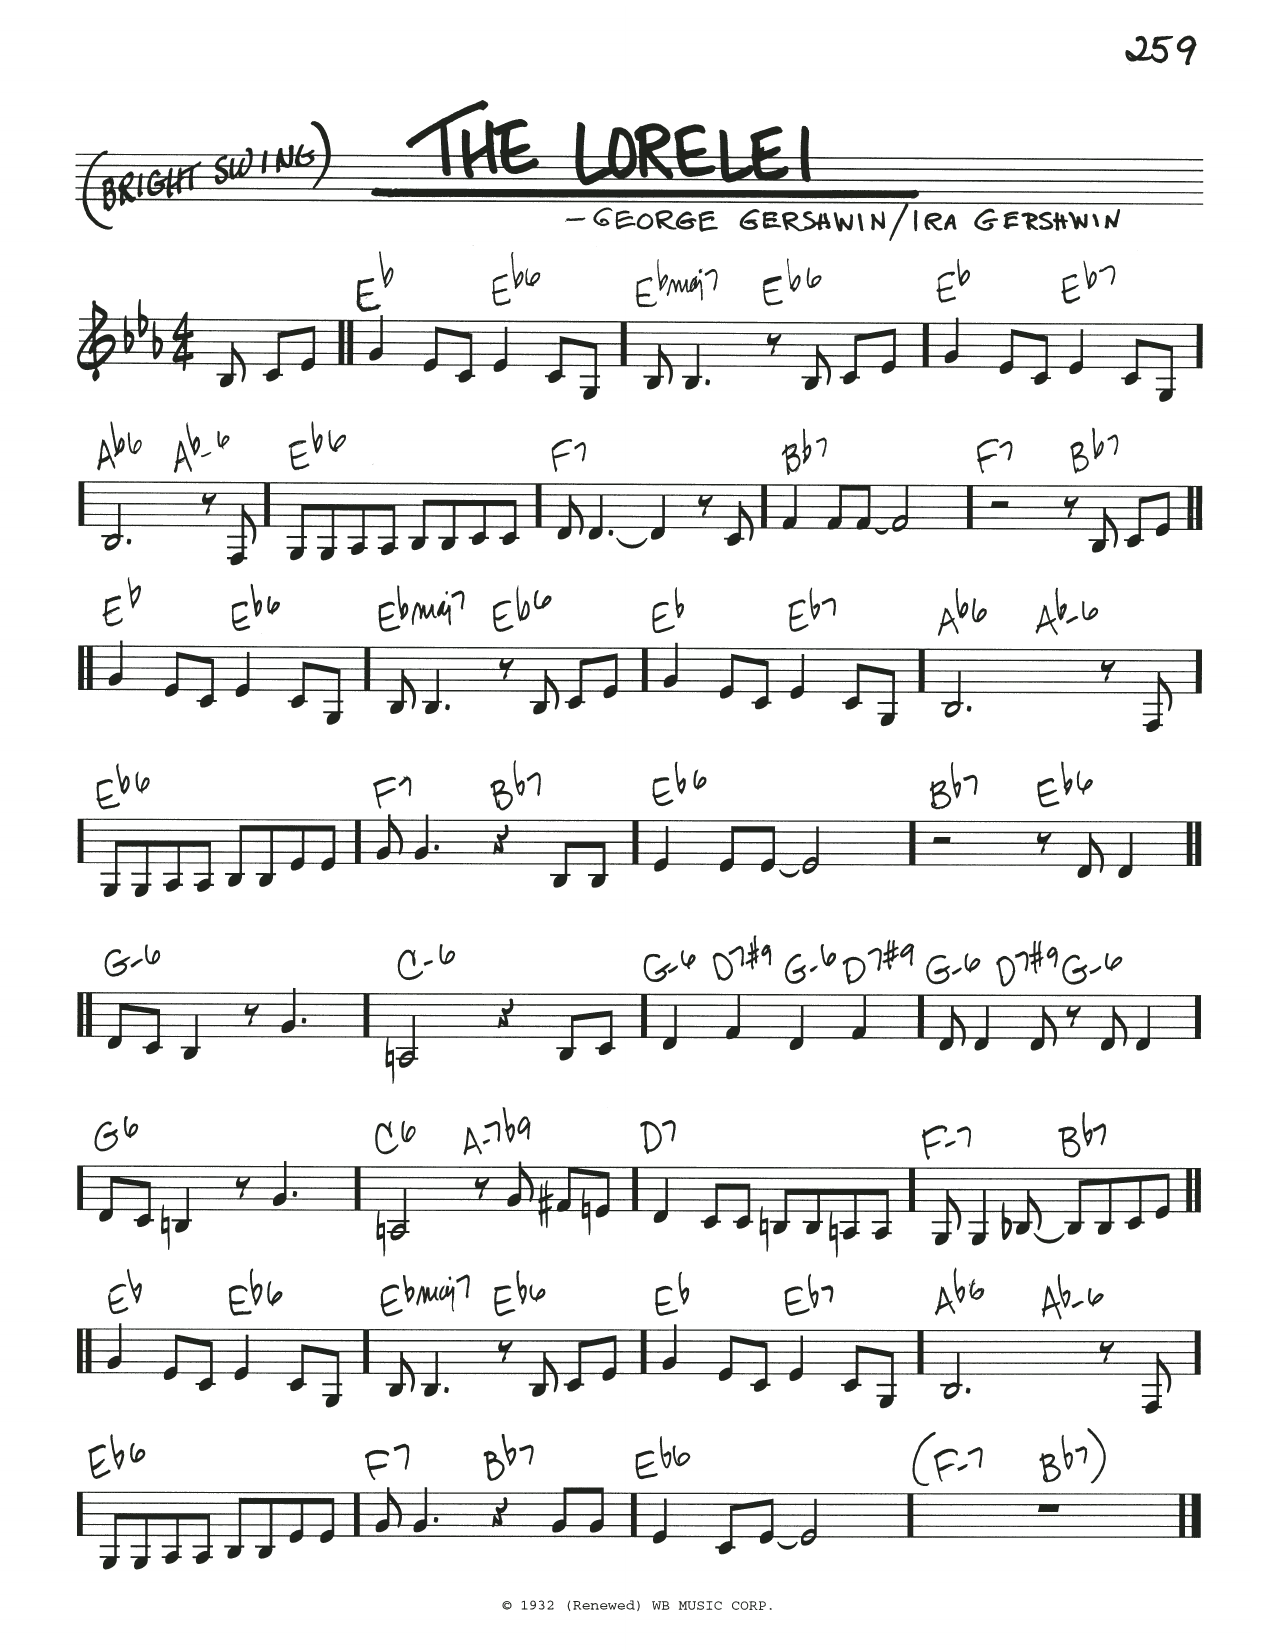 George Gershwin & Ira Gershwin The Lorelei Sheet Music Notes & Chords for Real Book – Melody & Chords - Download or Print PDF